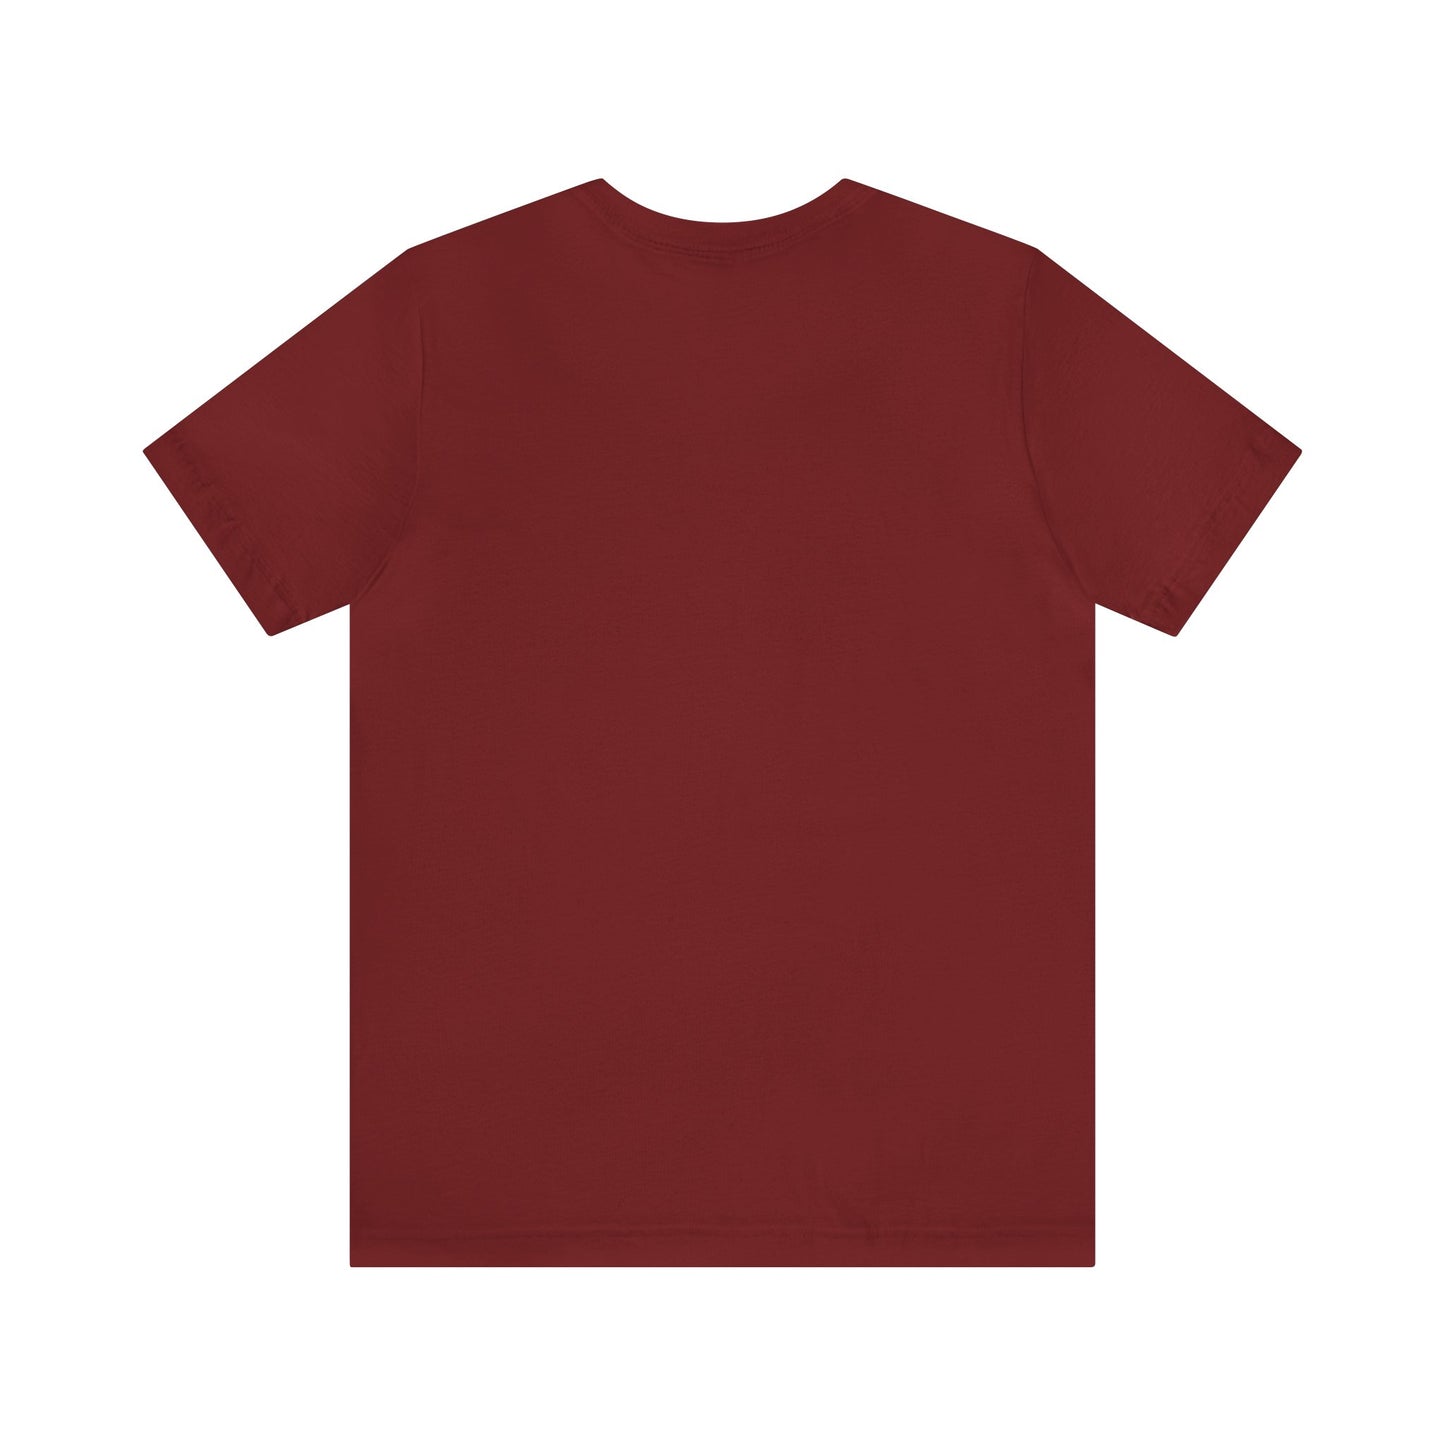 Raccoon on Art Deco Rays, Soft 100% Jersey Cotton T-Shirt, Unisex, Short Sleeve, Retail Fit